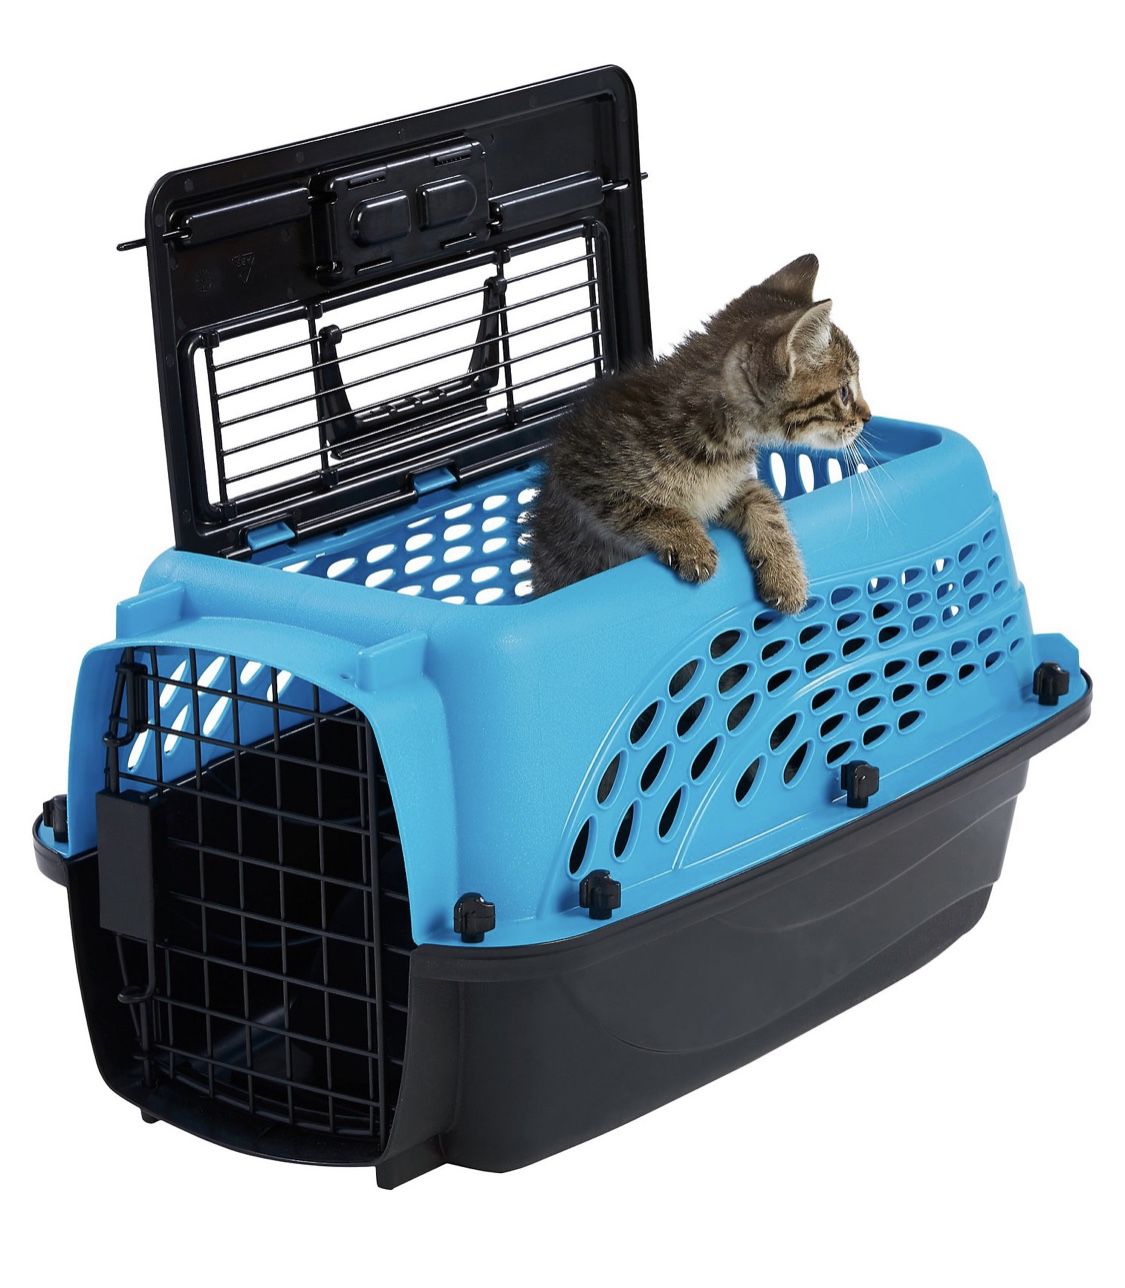 PET Dog Crate Carrier Kennel 2 Door Top Load - Small 19”